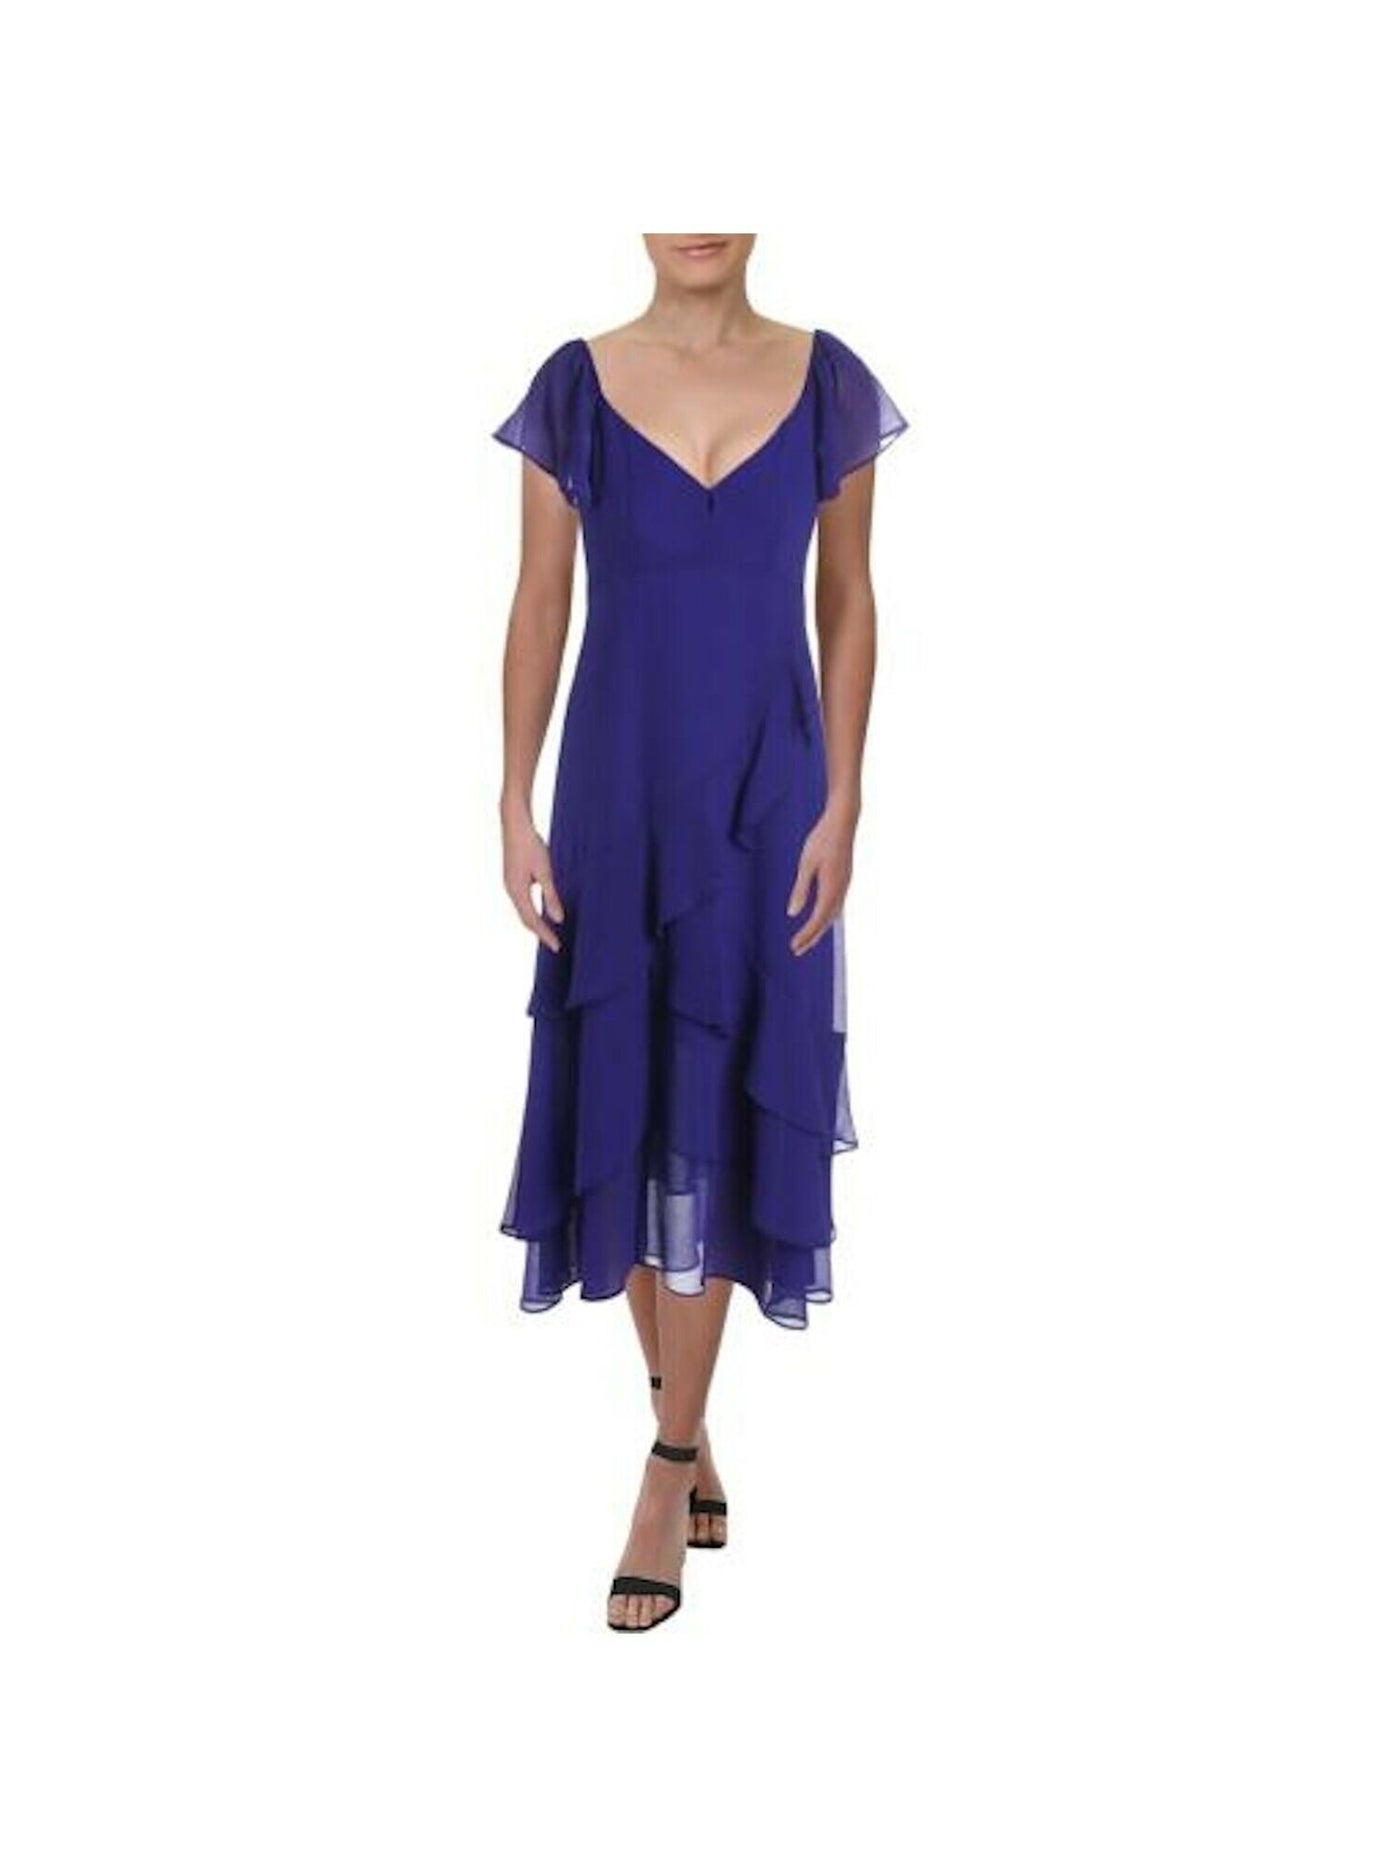 NANETTE LEPORE Womens Purple Short Sleeve Midi Sheath Party Dress Size: 2